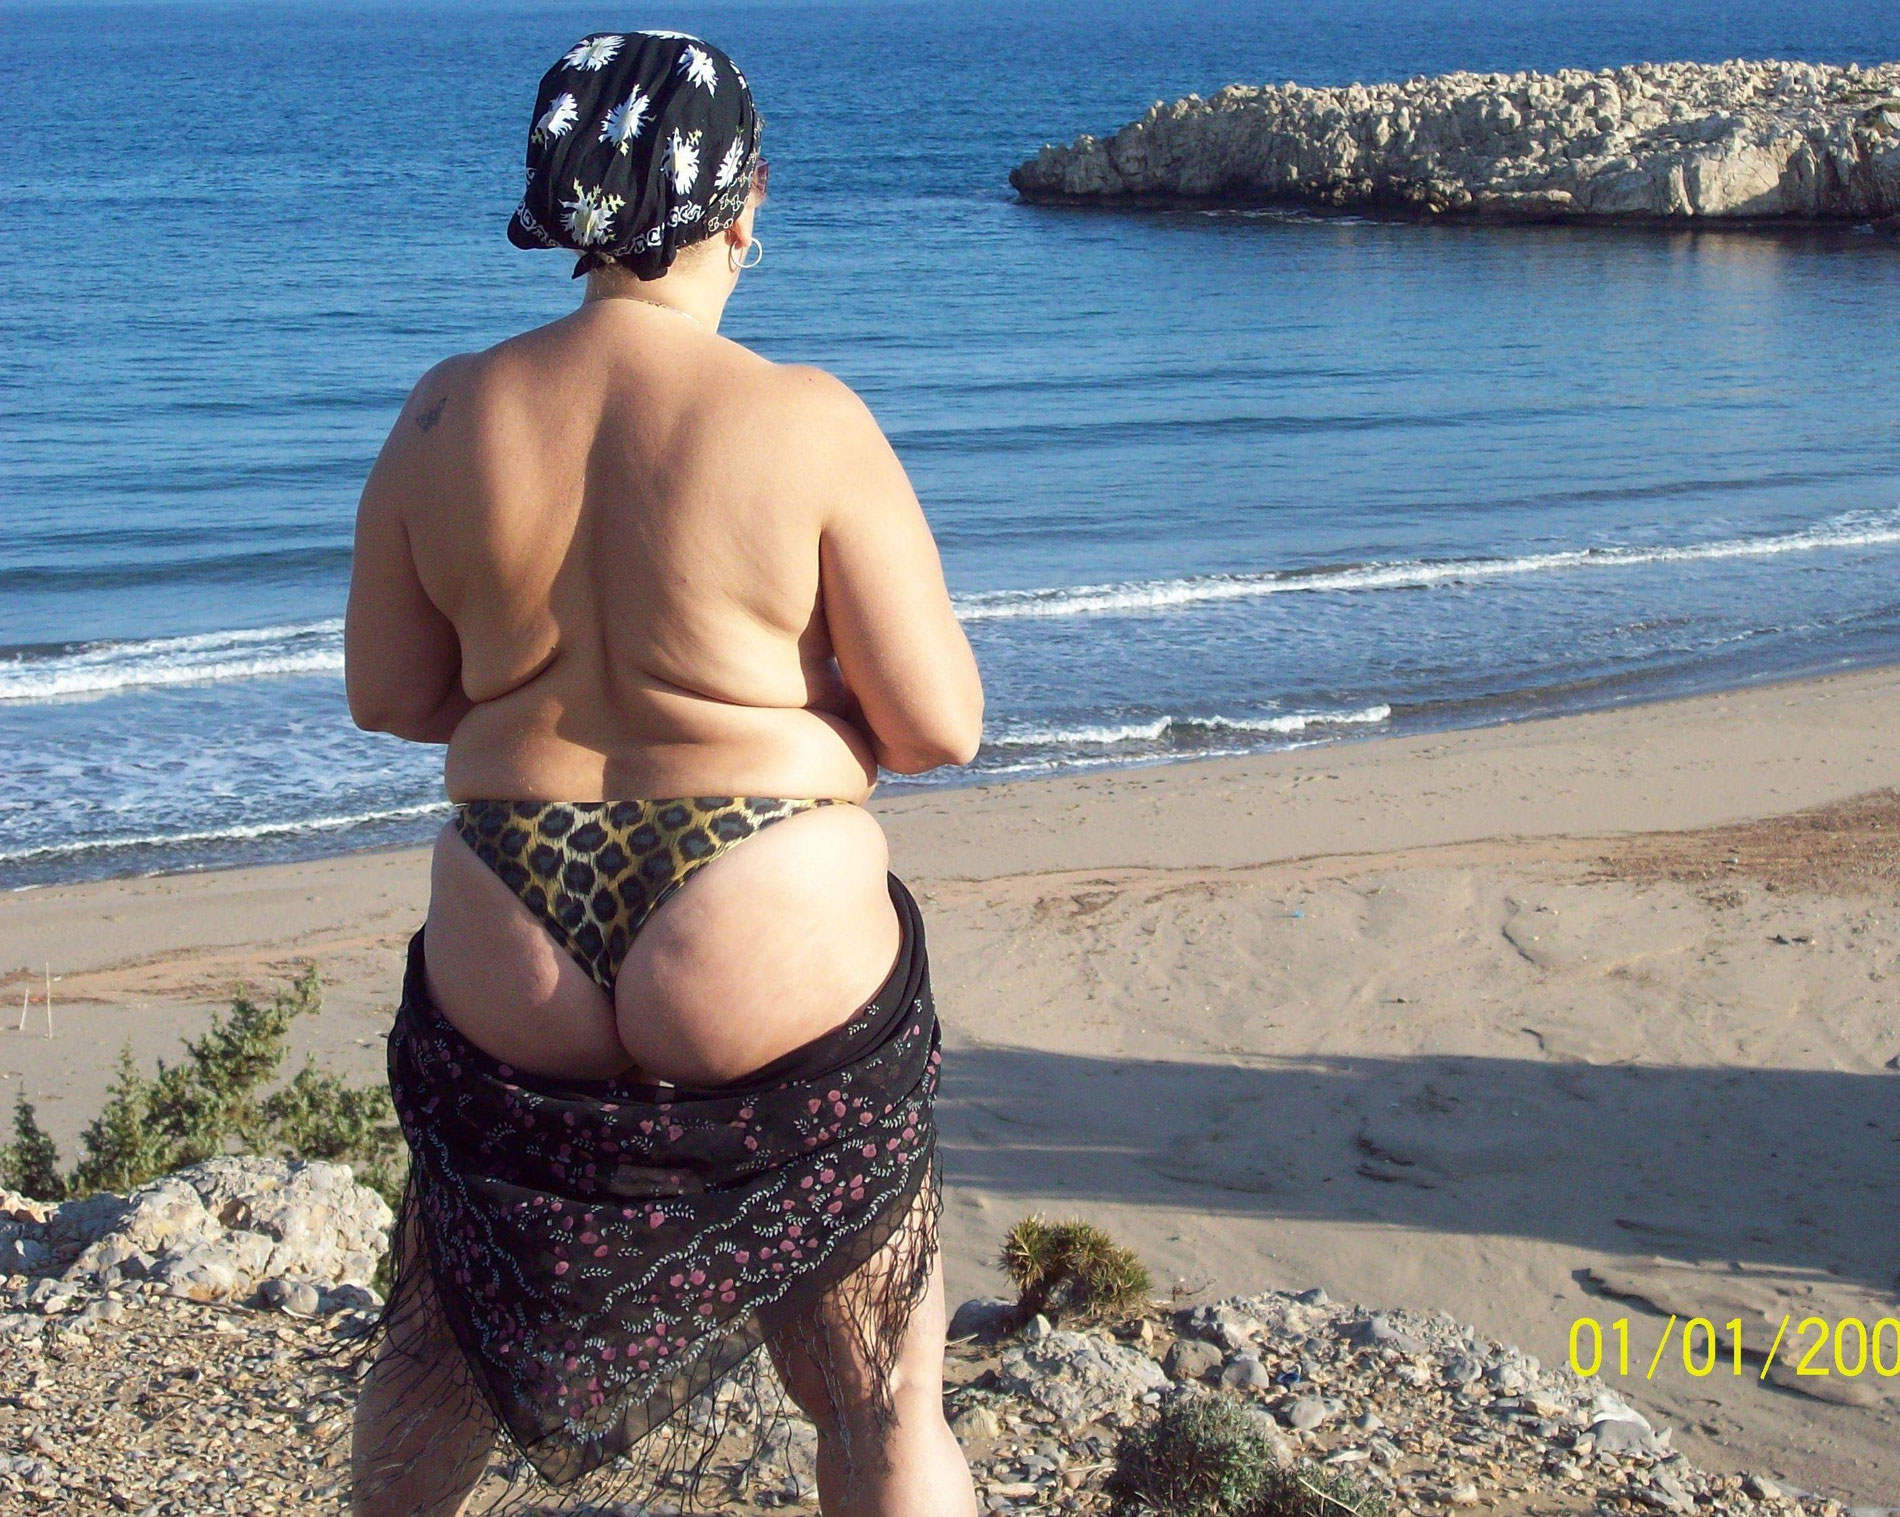 Hot Fat Granny At Beach - Fat nudist moms and grannies sunbathing nude on beach